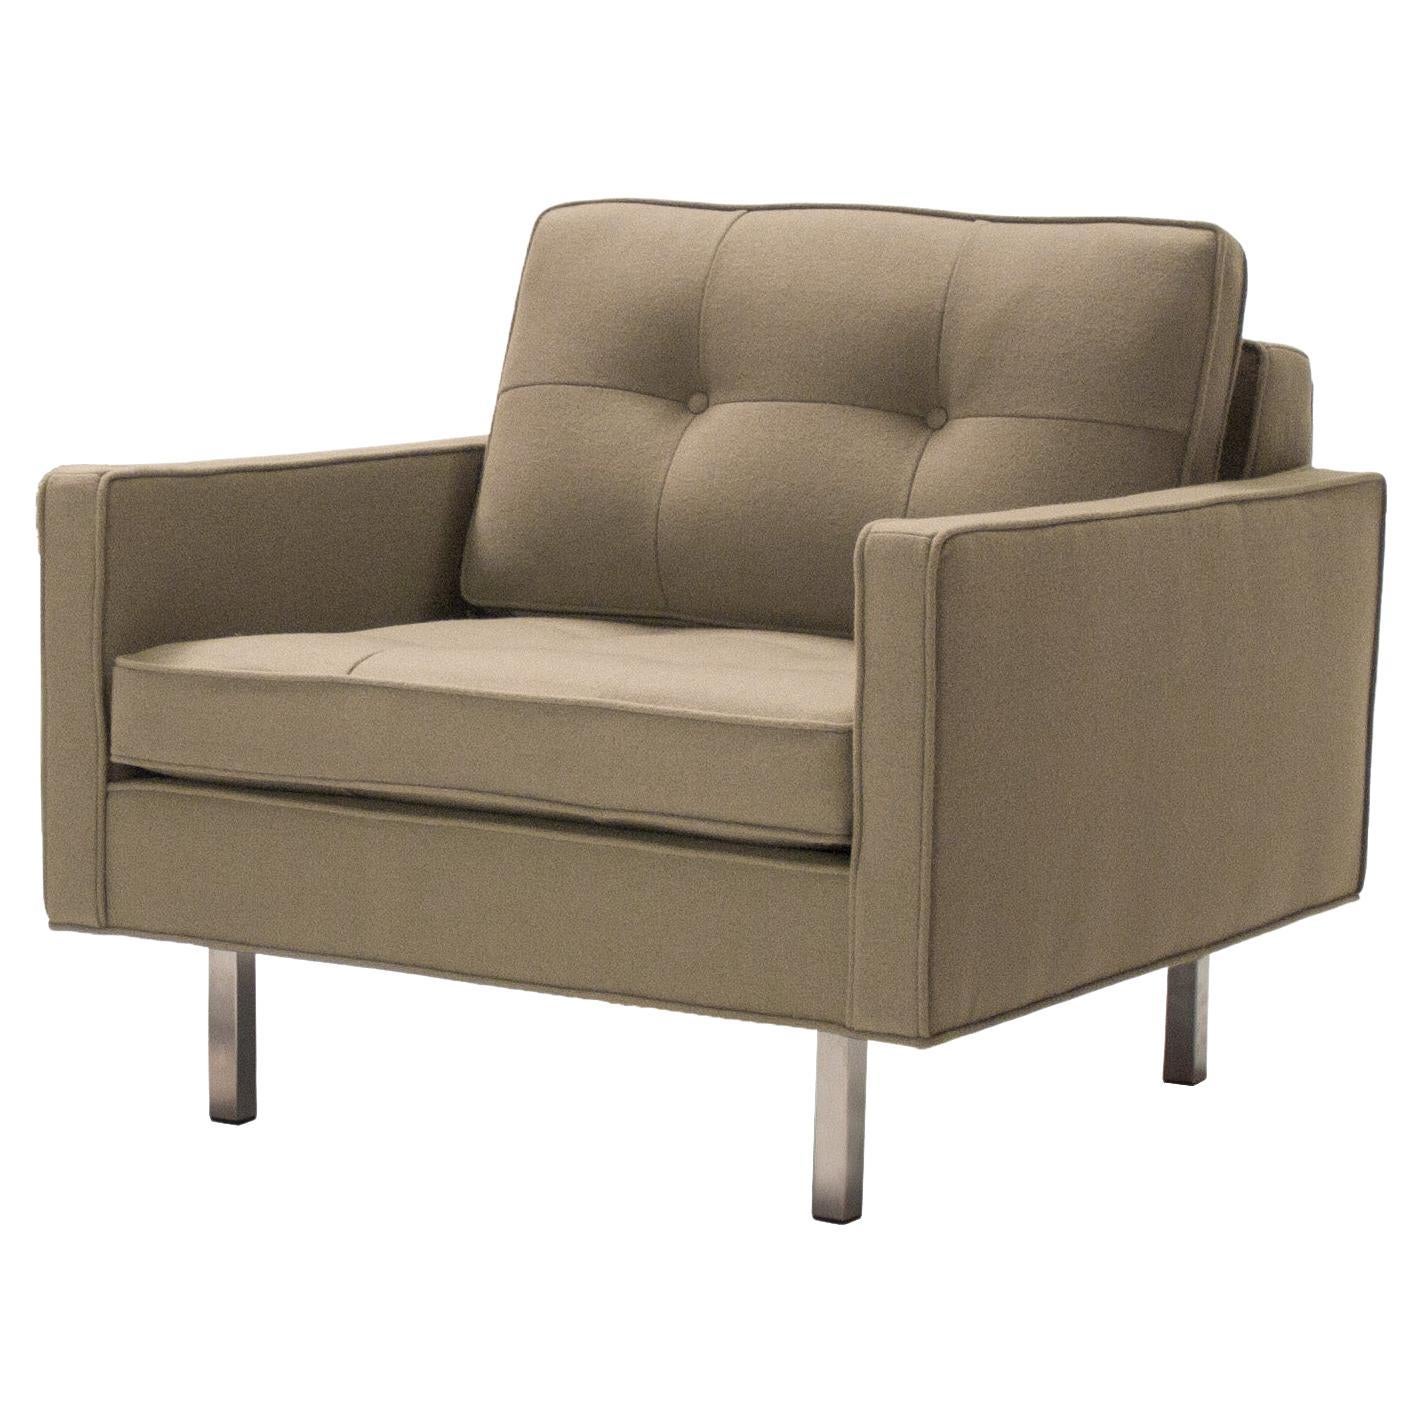 Vioski New Century Modern Chicago Lounge Chair in Tan